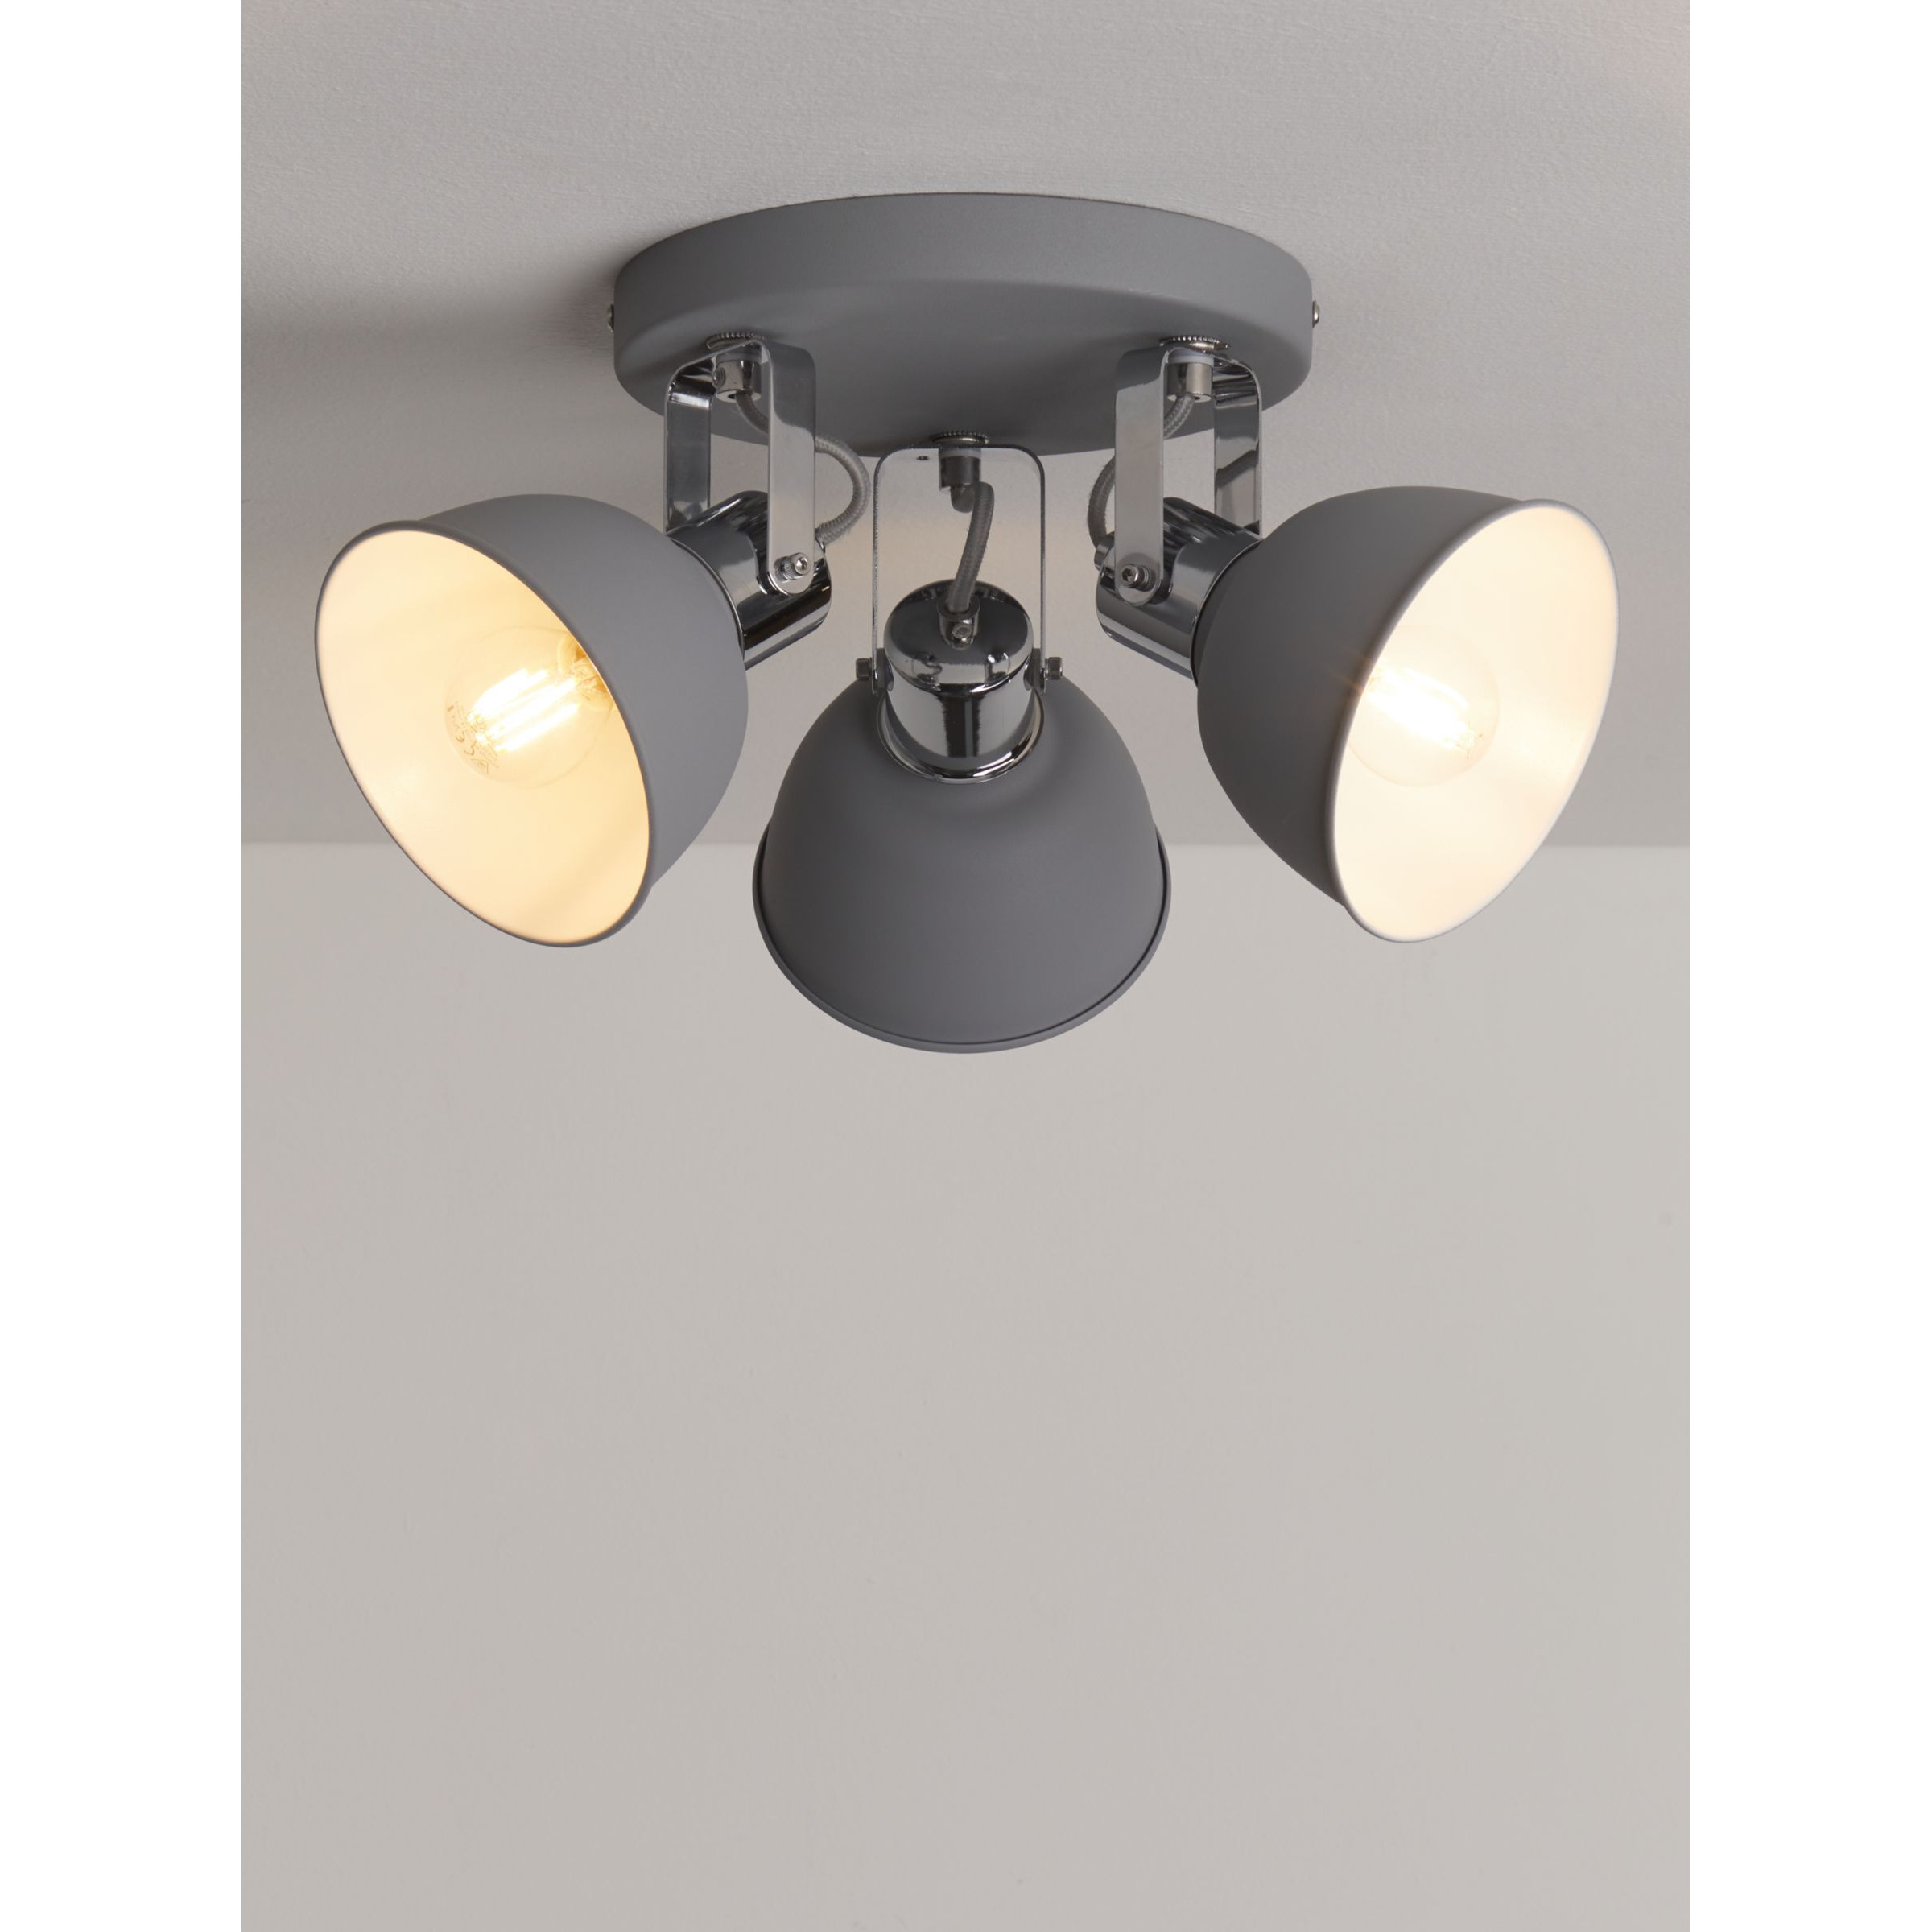 John Lewis SES LED 3 Spotlight Ceiling Plate, Grey - image 1